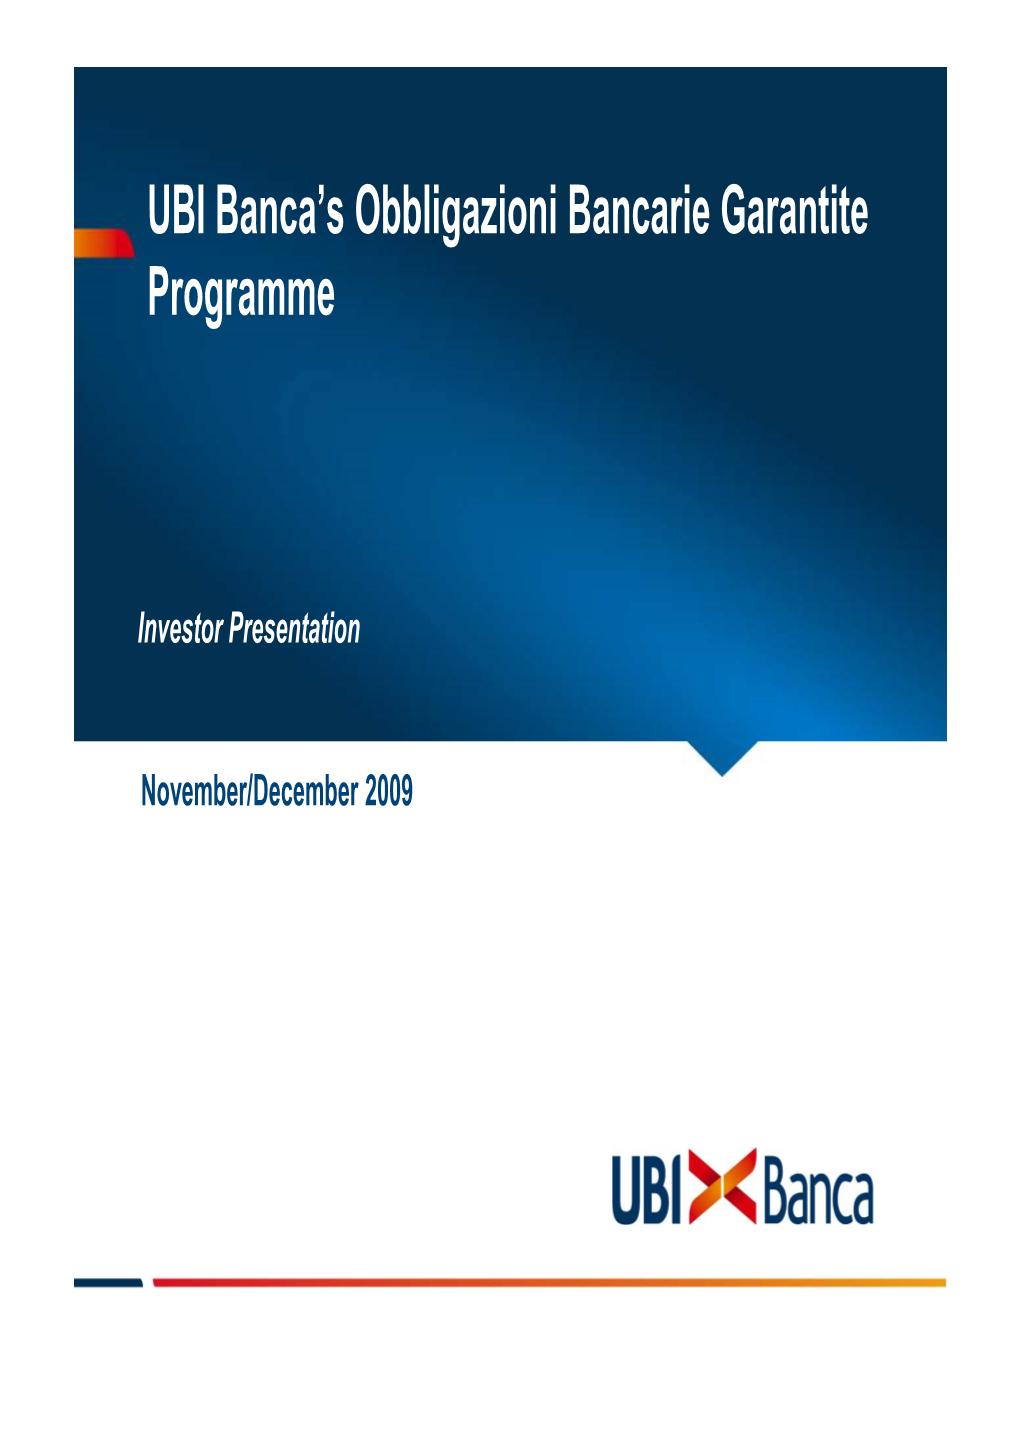 UBI Banca's Obbligazioni Bancarie Garantite Programme